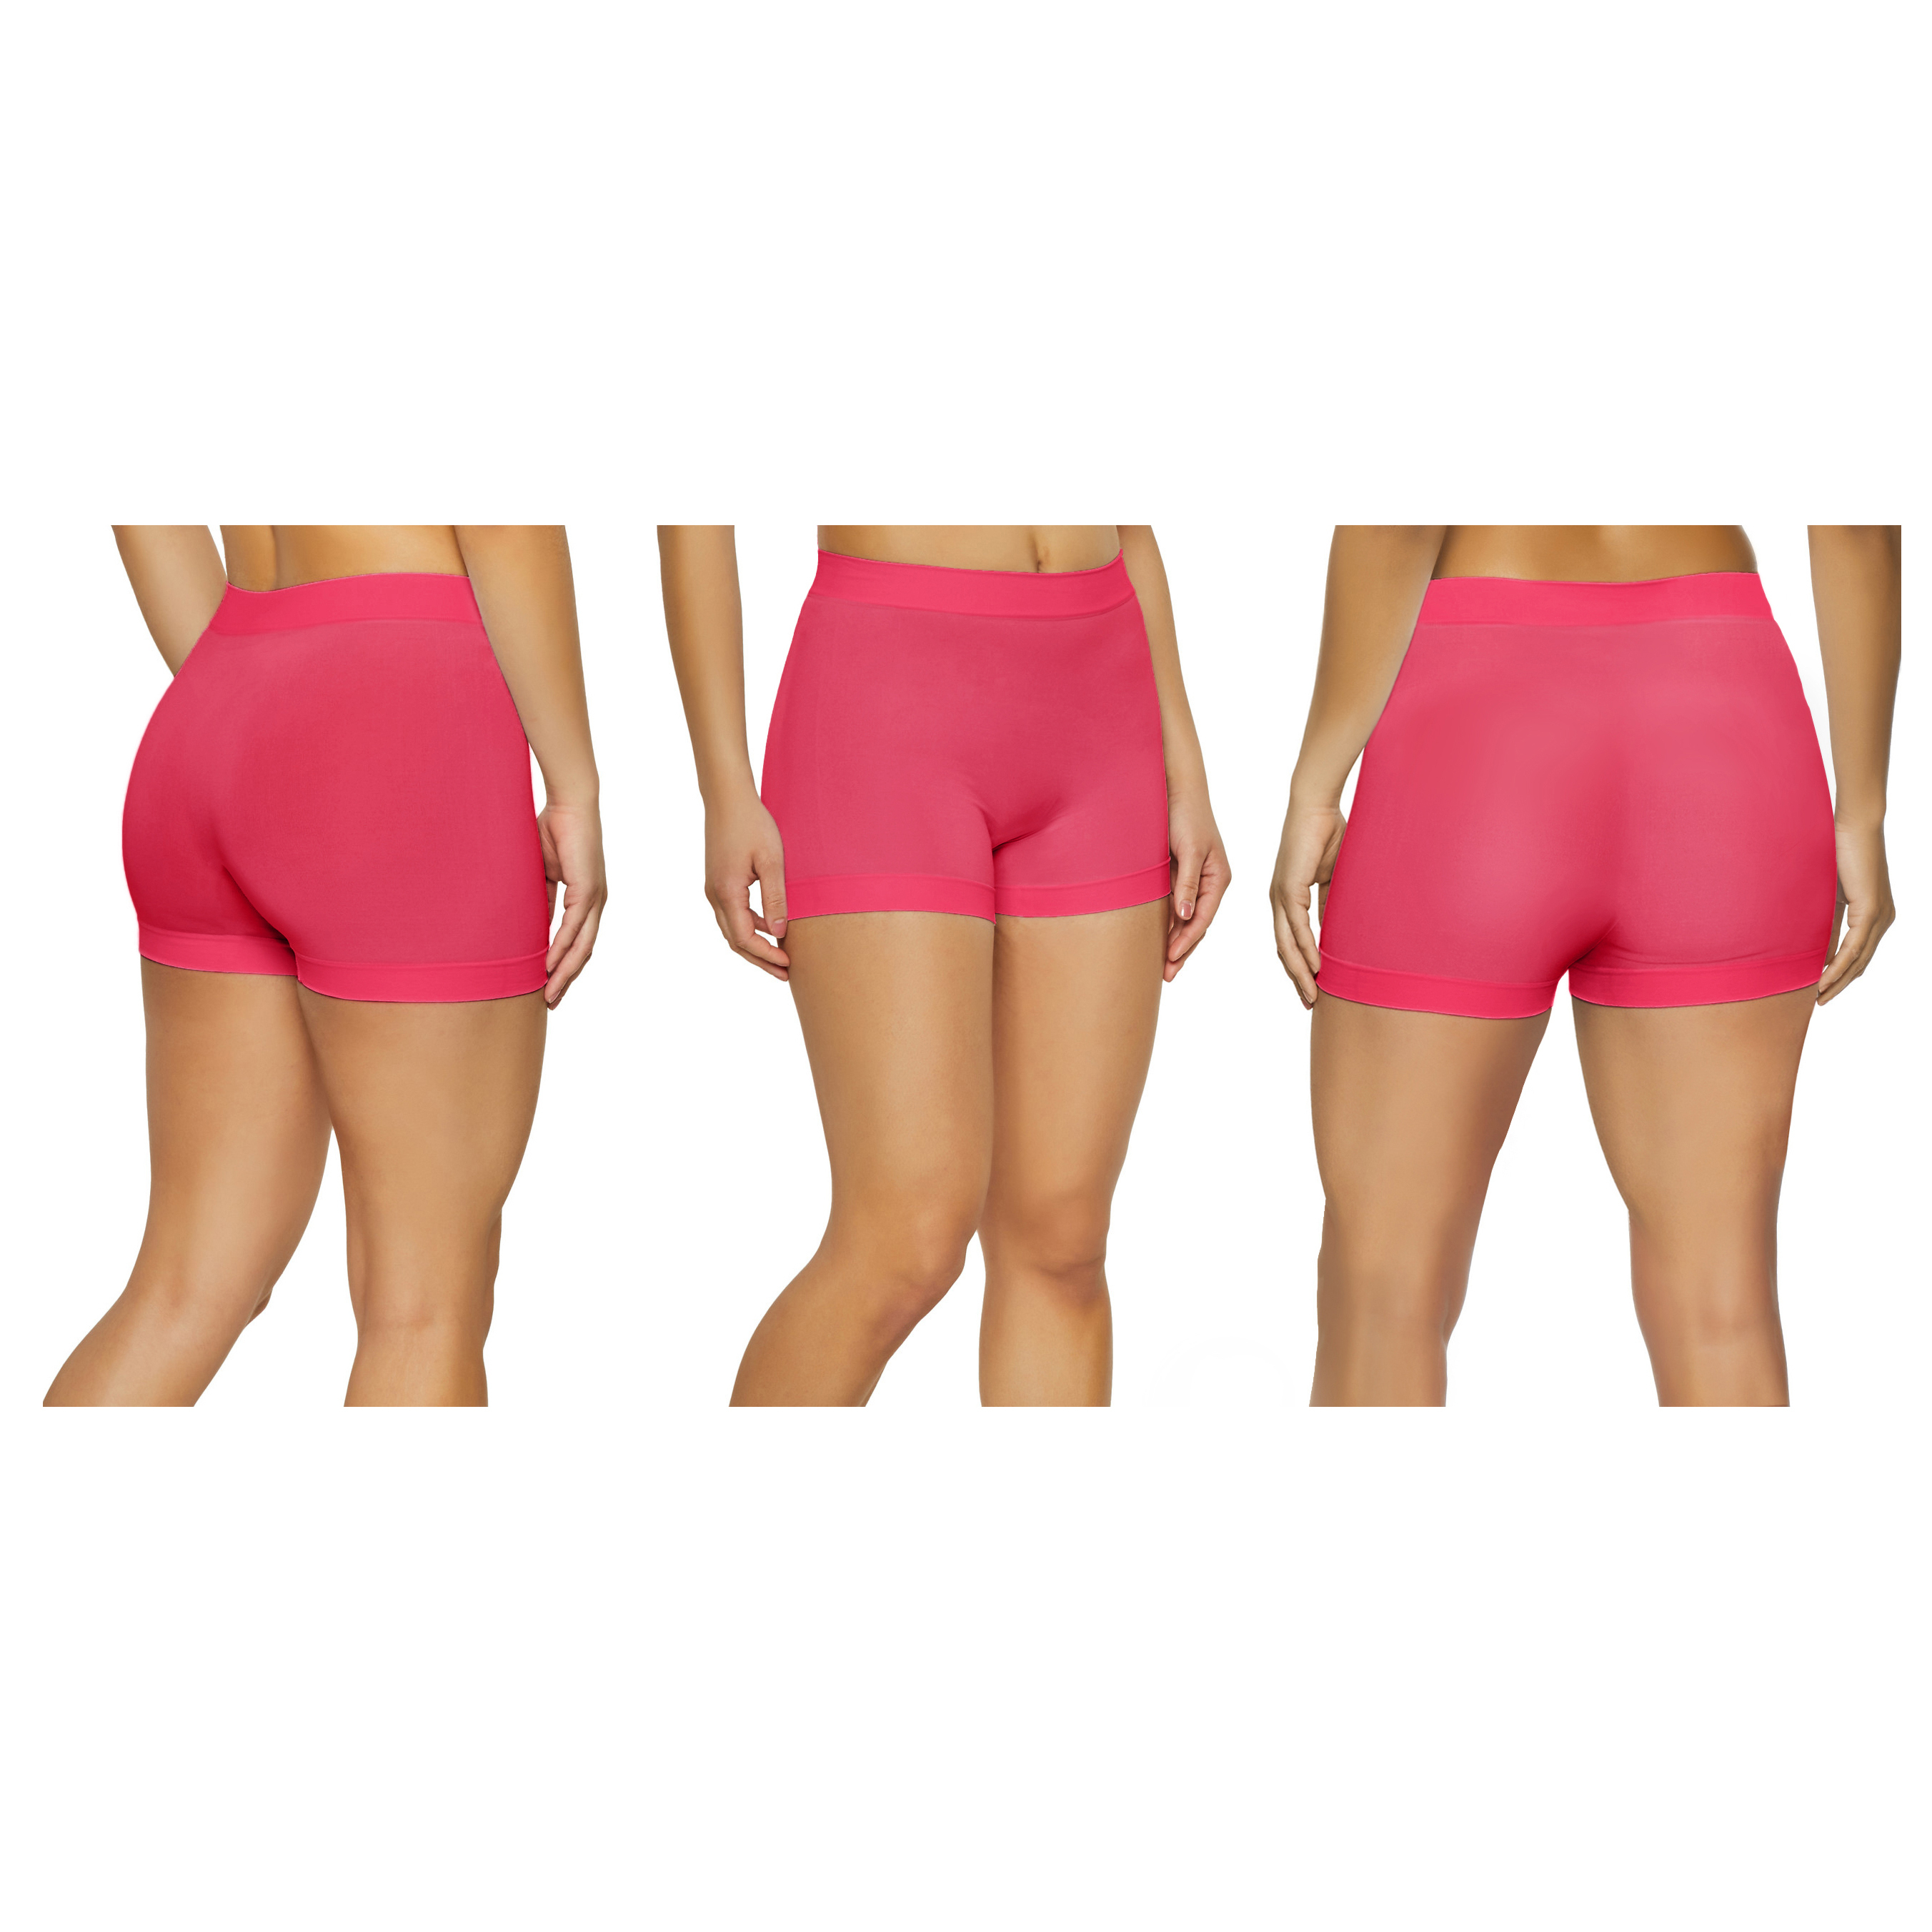 12-Pack Women's High Waisted Biker Bottom Shorts For Yoga Gym Running Ladies Pants - ASSORTED, XXL